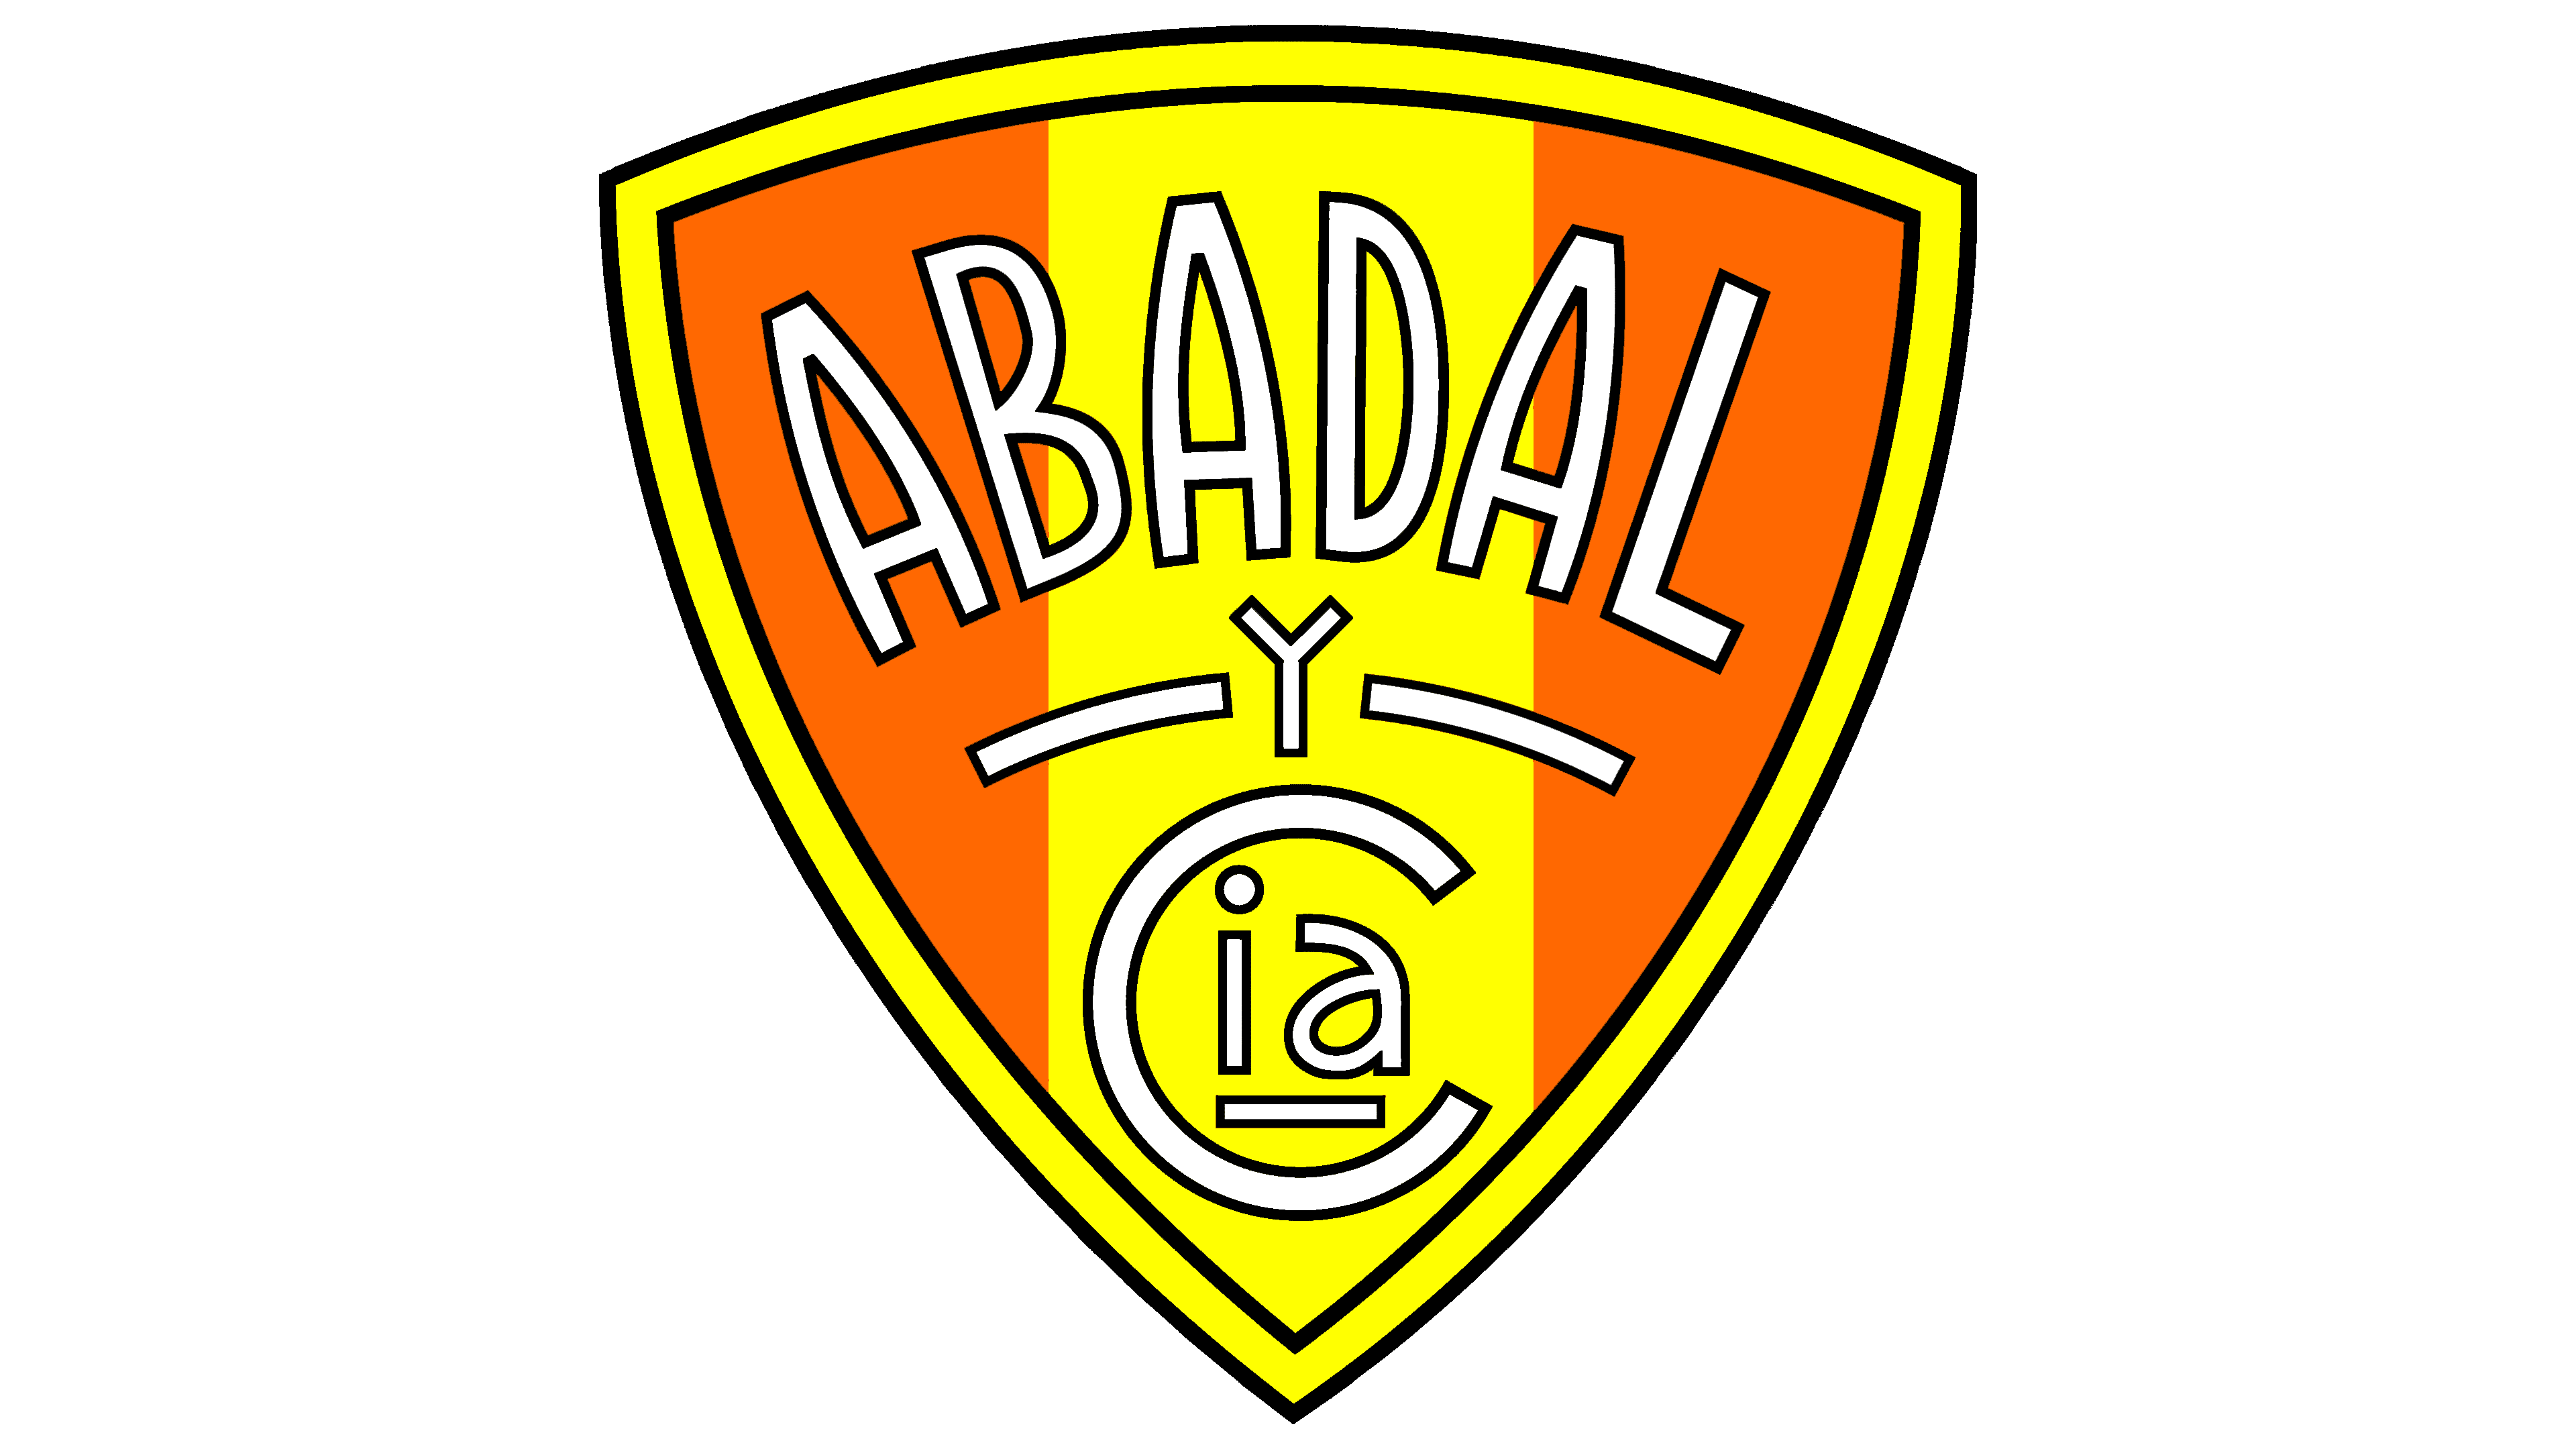 Abadal Logo